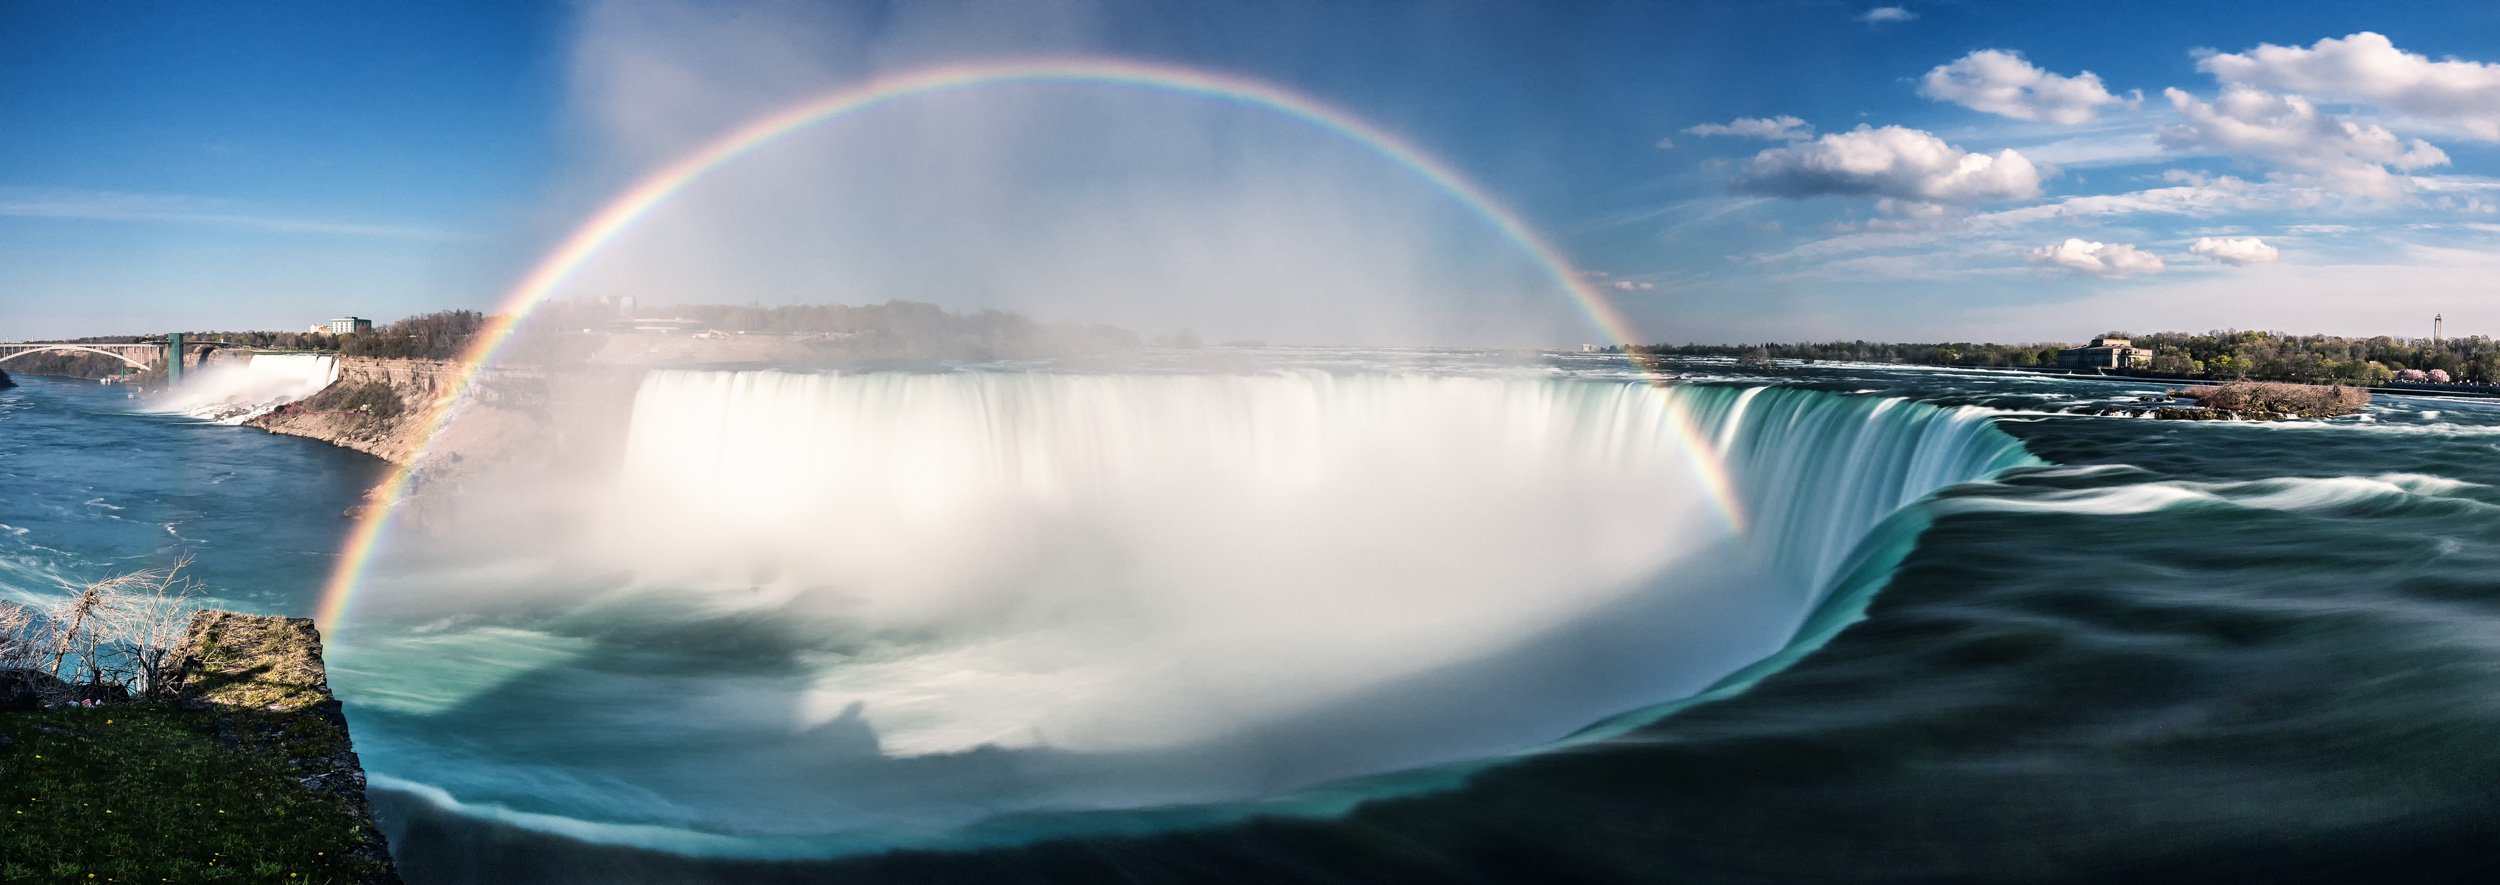 Regenbogen über den Niagarafällen - Landschaftsfotografie